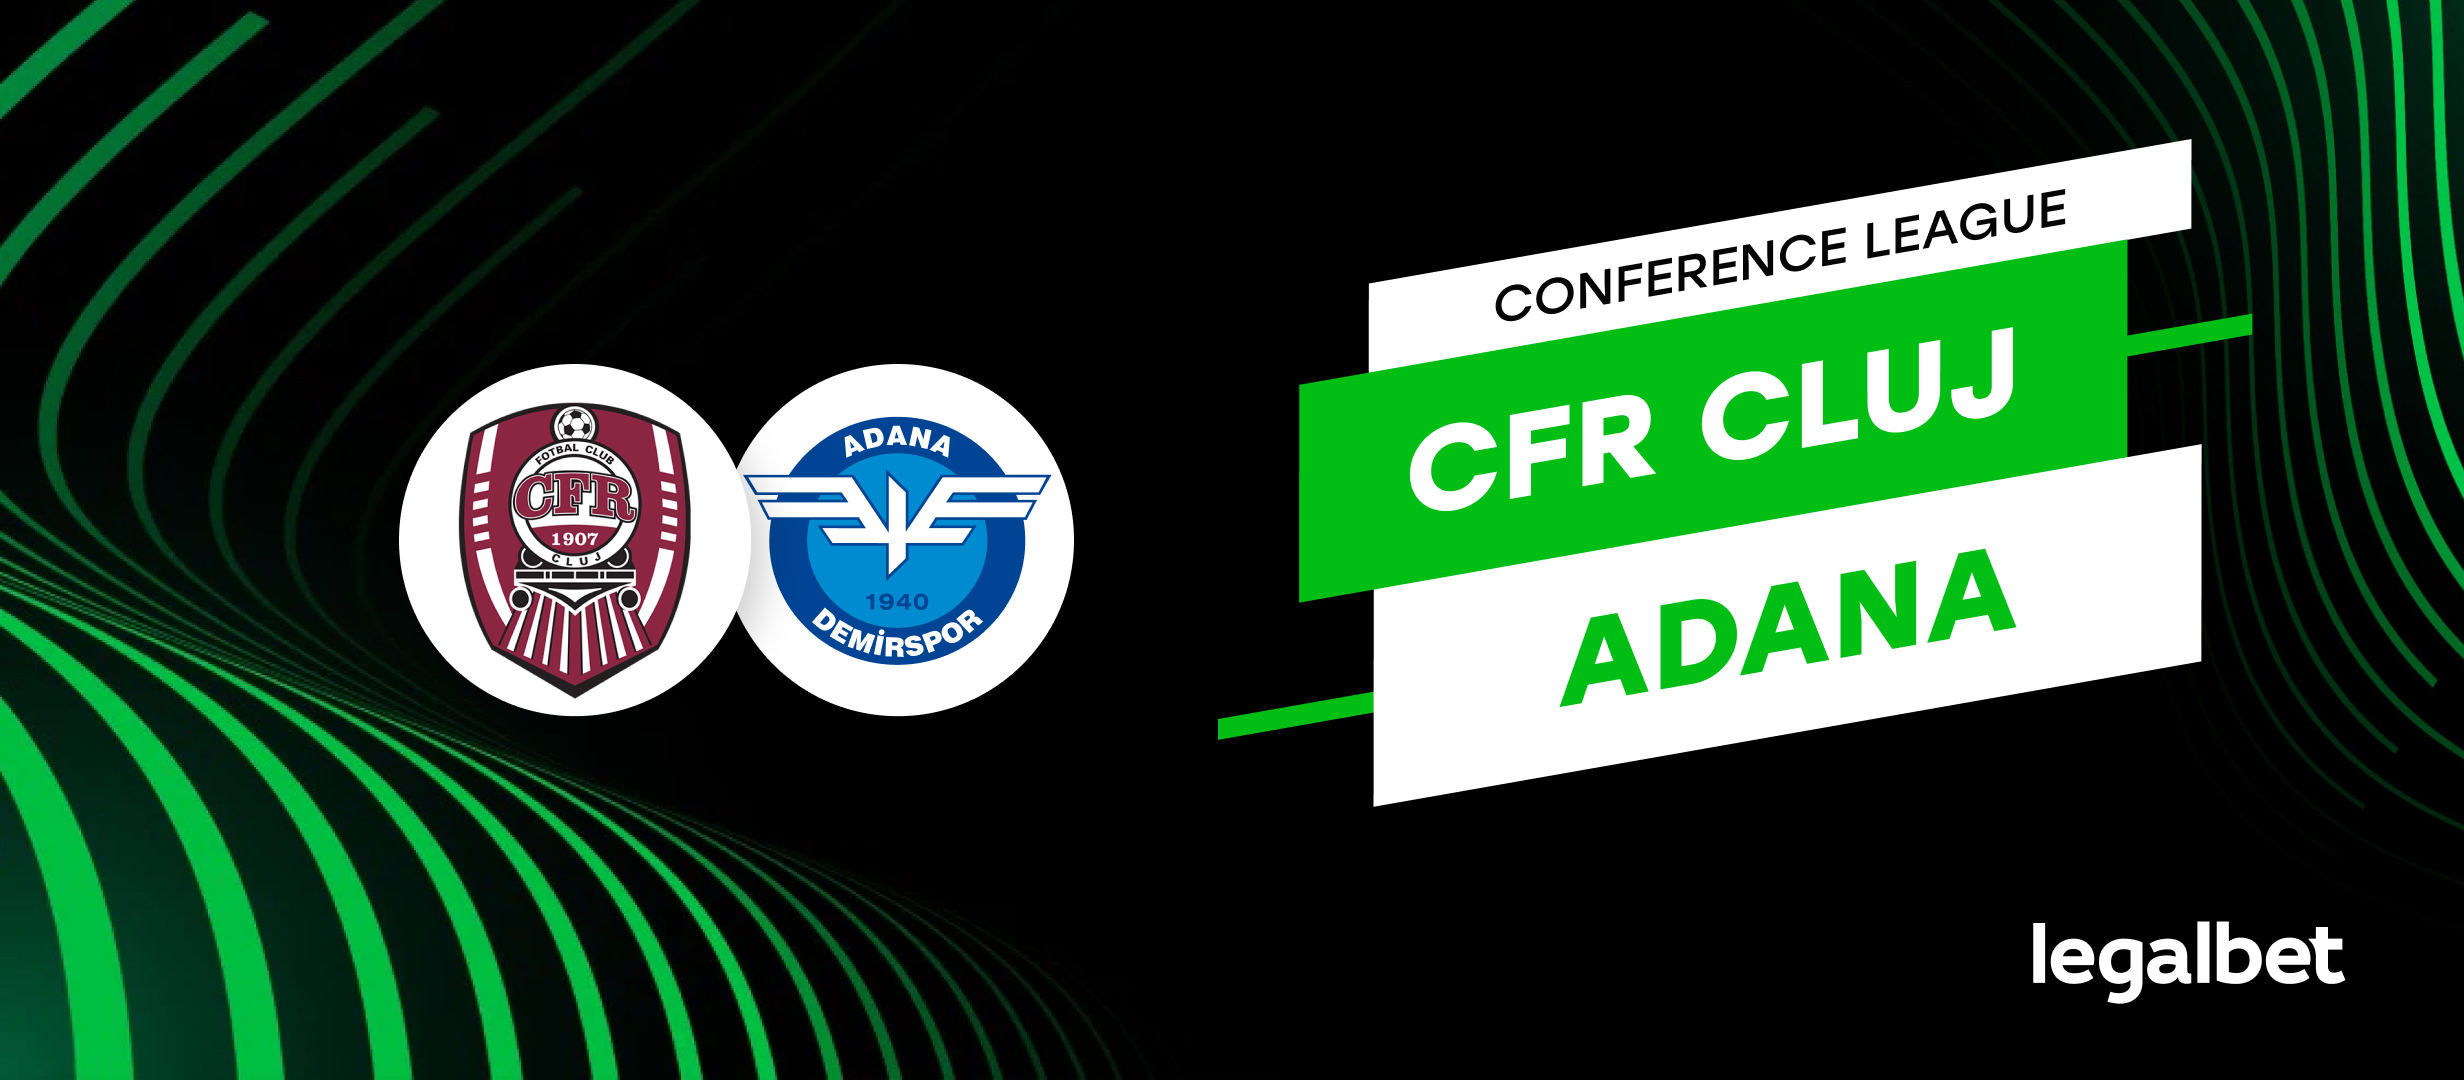 CFR Cluj vs Adana Demirspor – cote la pariuri, ponturi si informatii